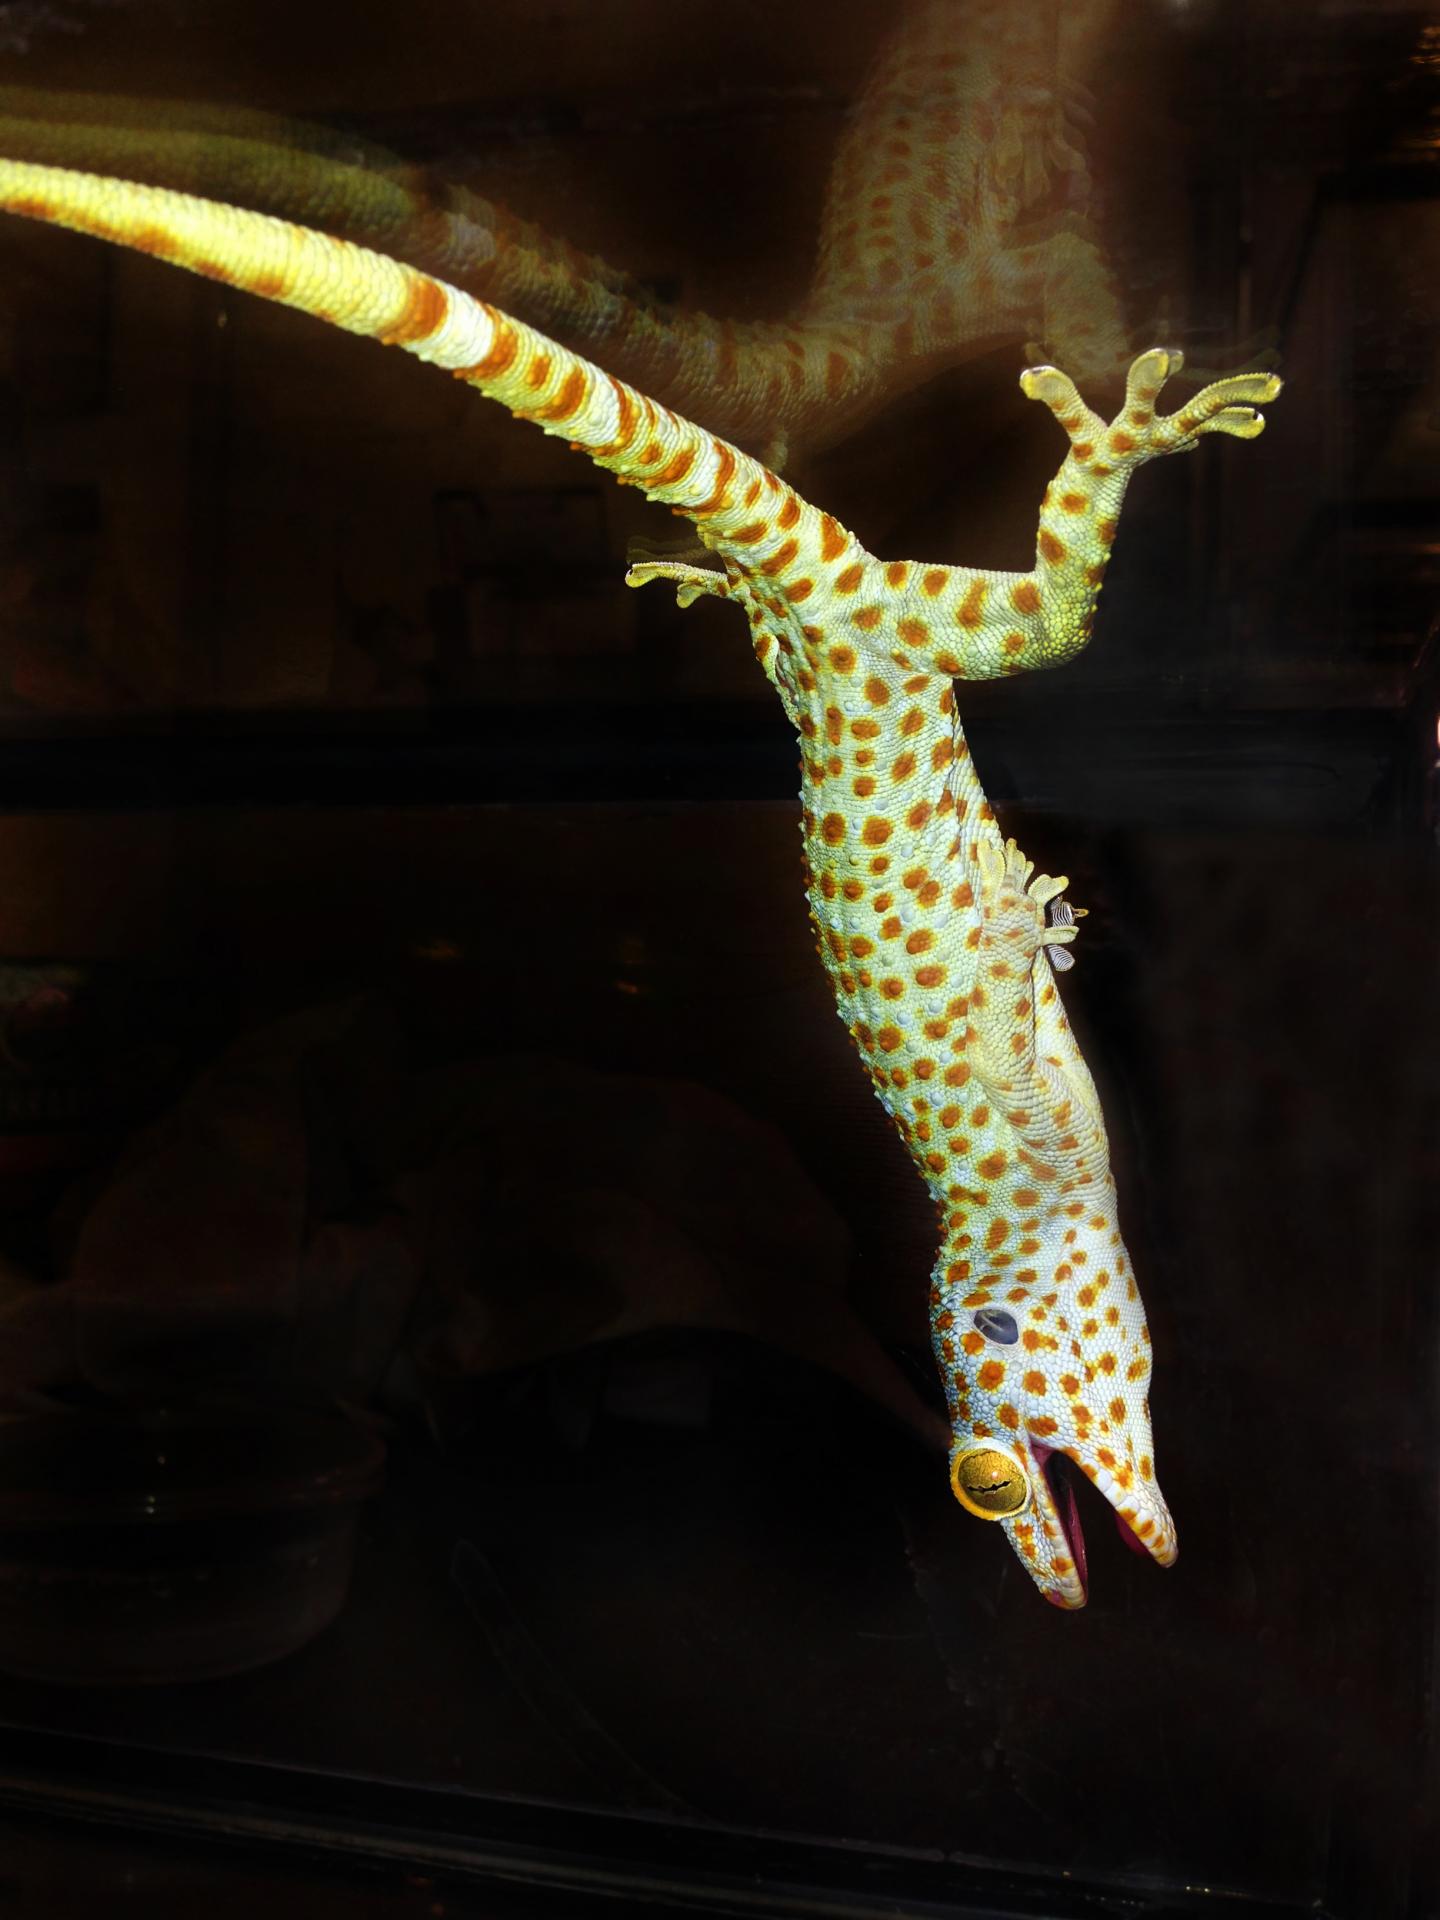 Tokay Gecko on Smooth Surface